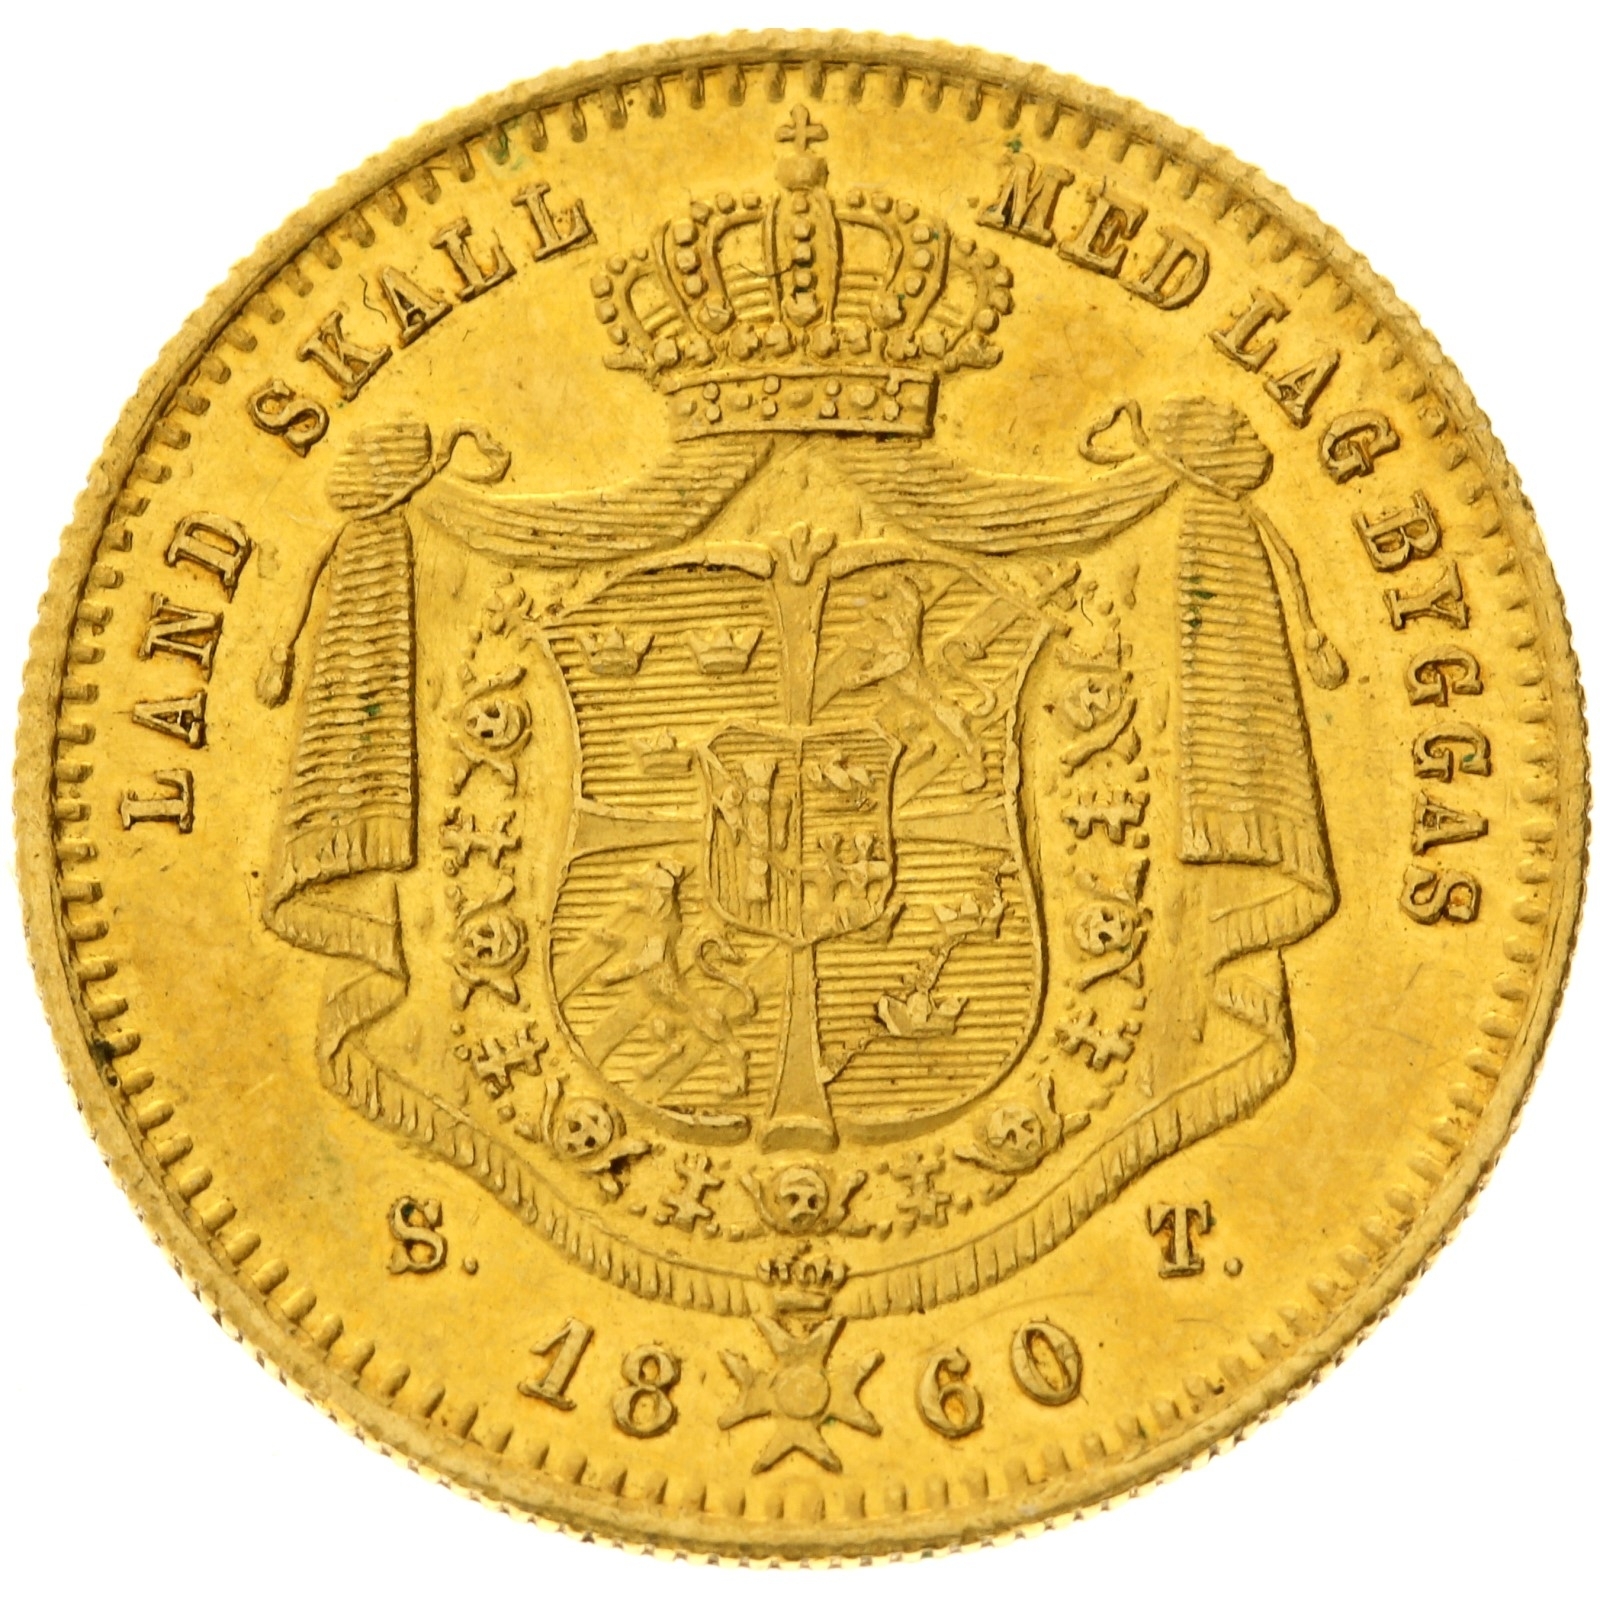 Sweden - 1 ducat - 1860 - Karl XV